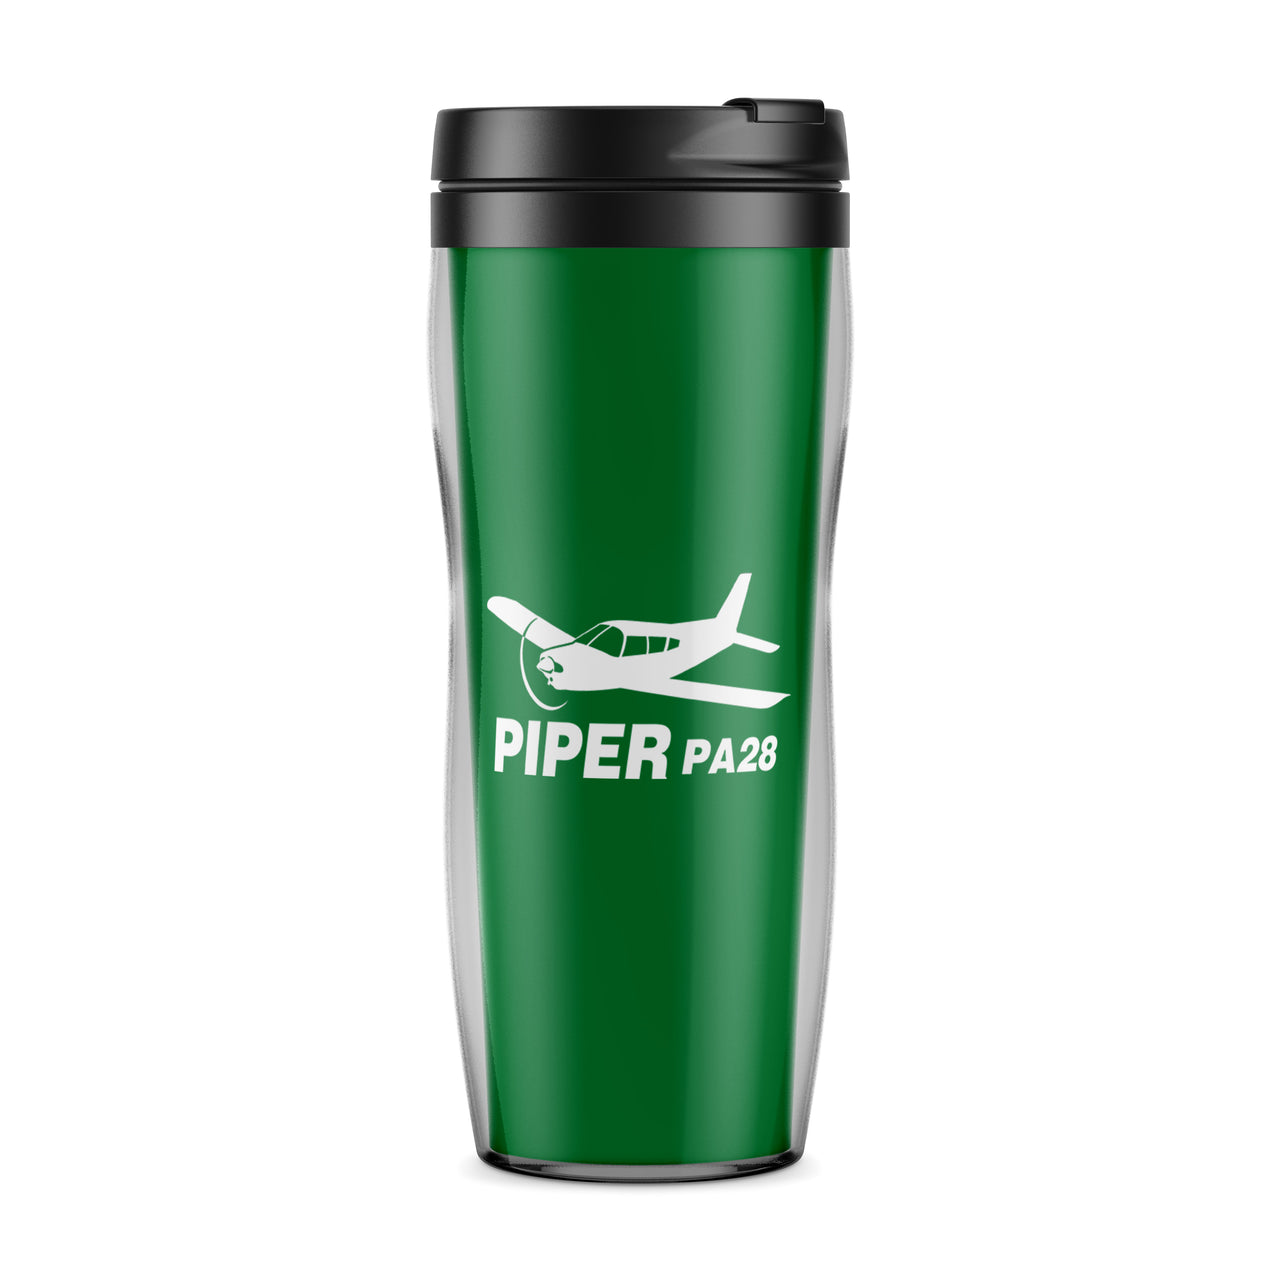 The Piper PA28 Designed Travel Mugs